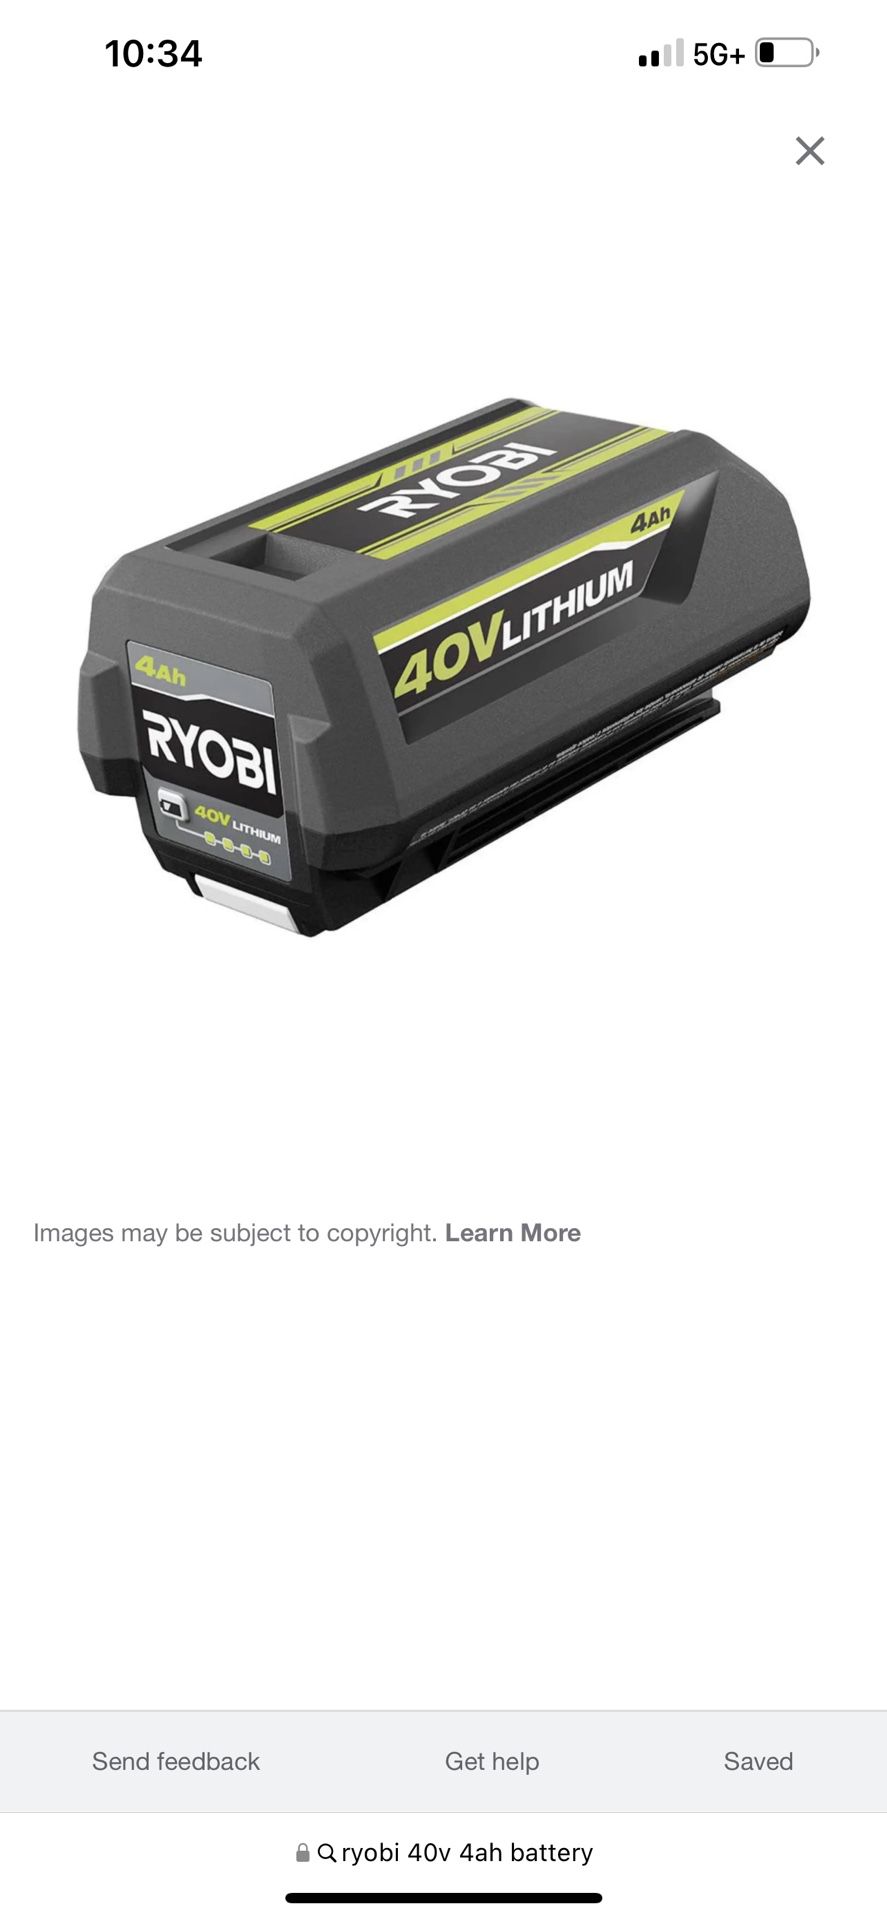 Ryobi 40 V 4ah Battery 